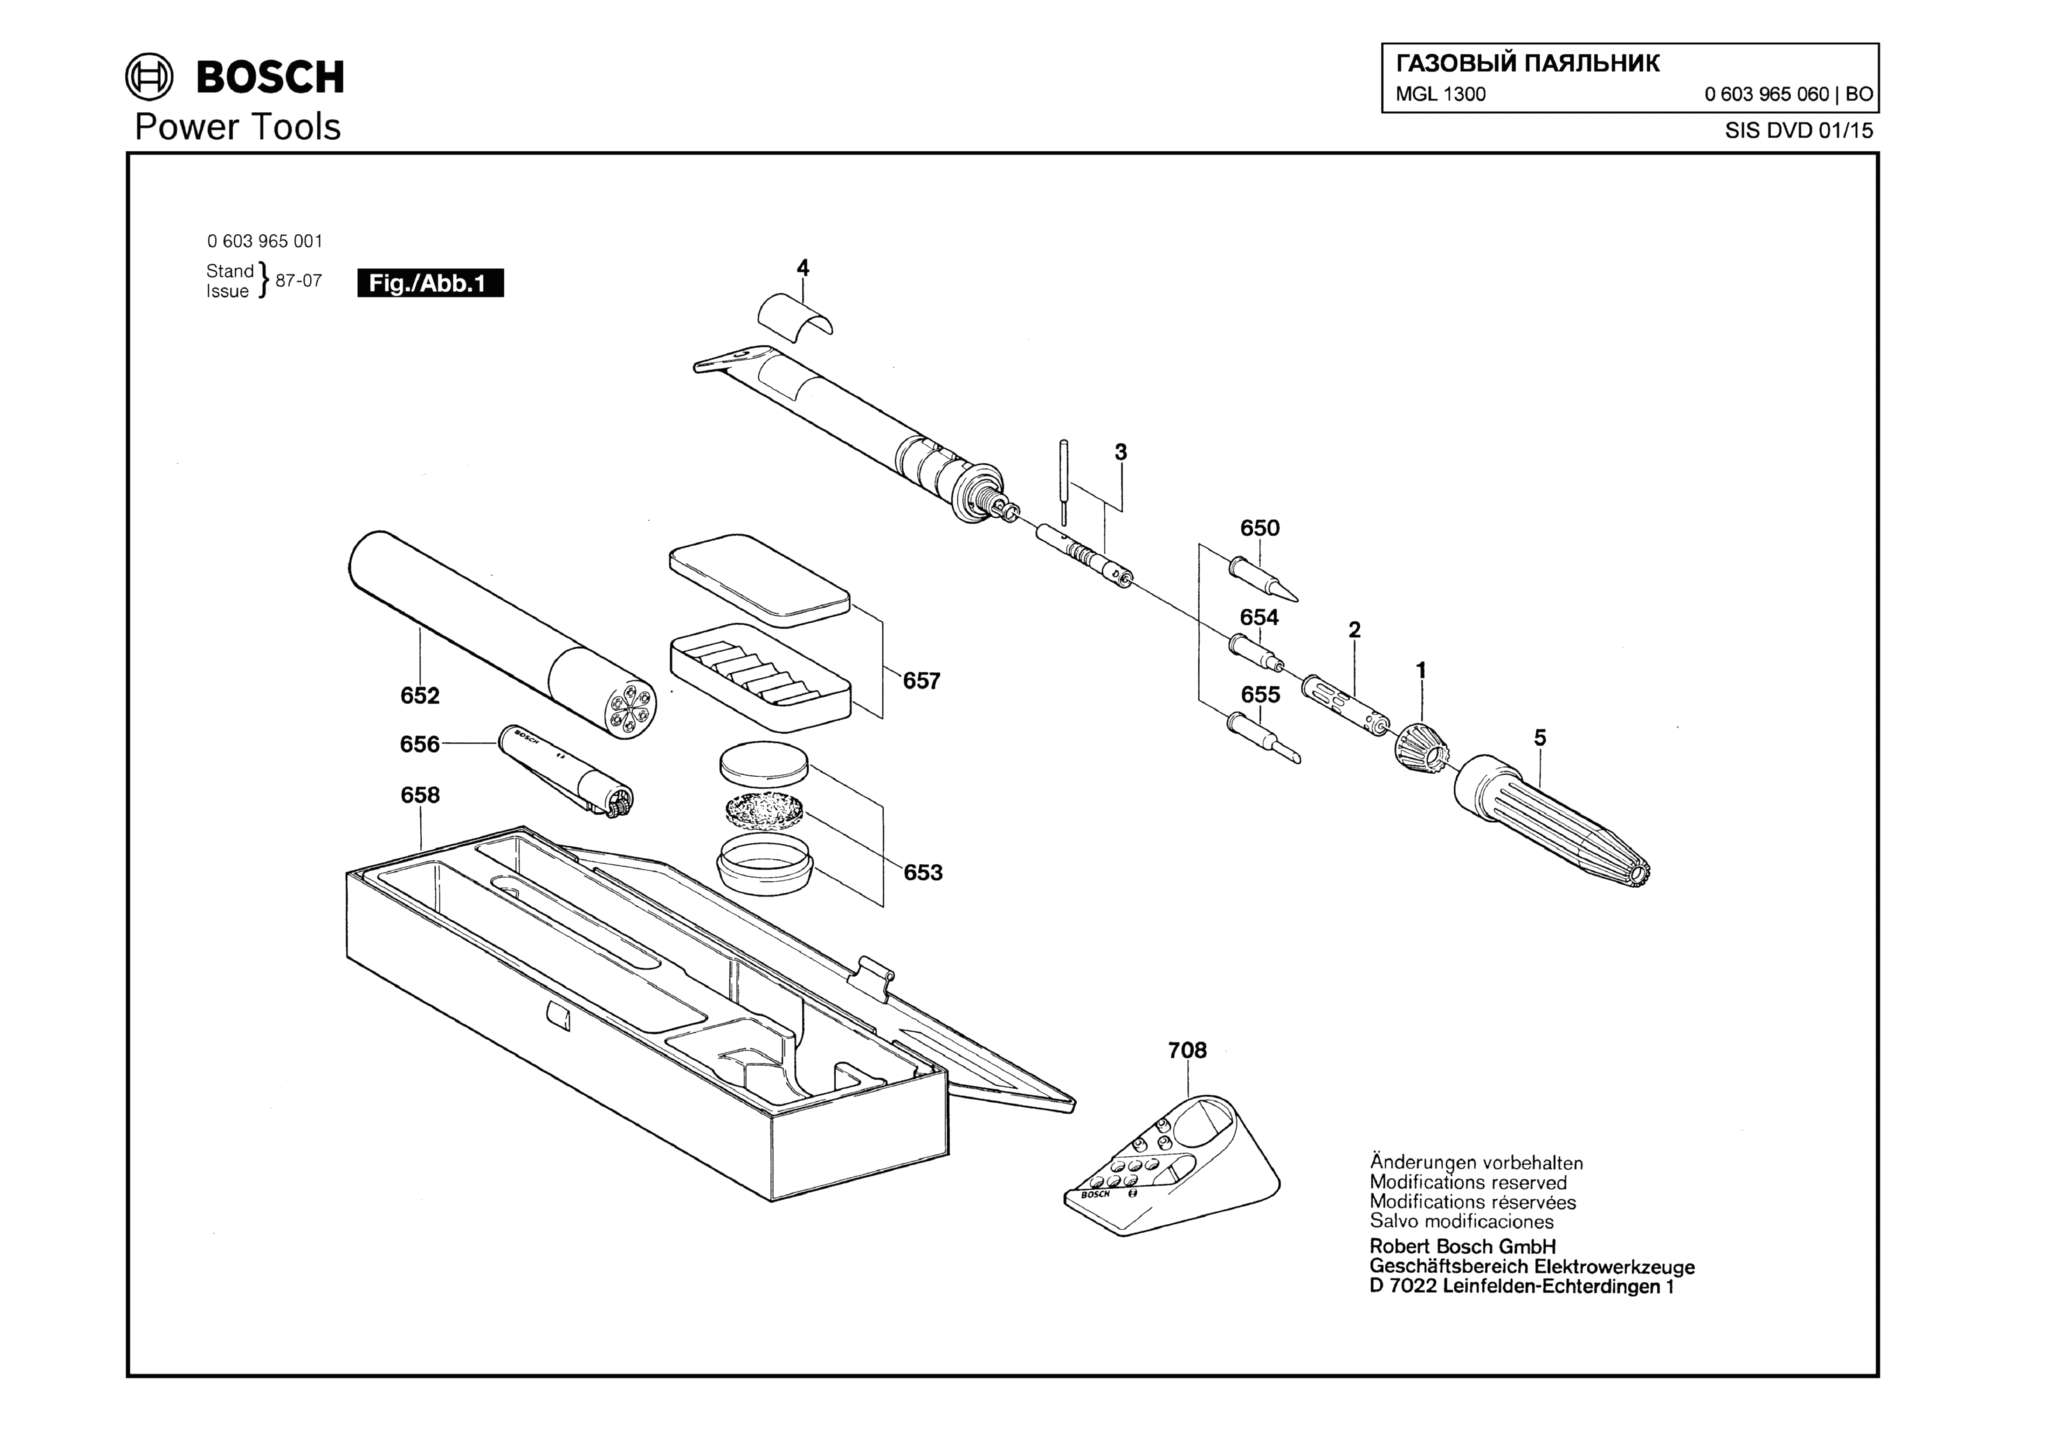 Запчасти, схема и деталировка Bosch MGL 1300 (ТИП 0603965060)